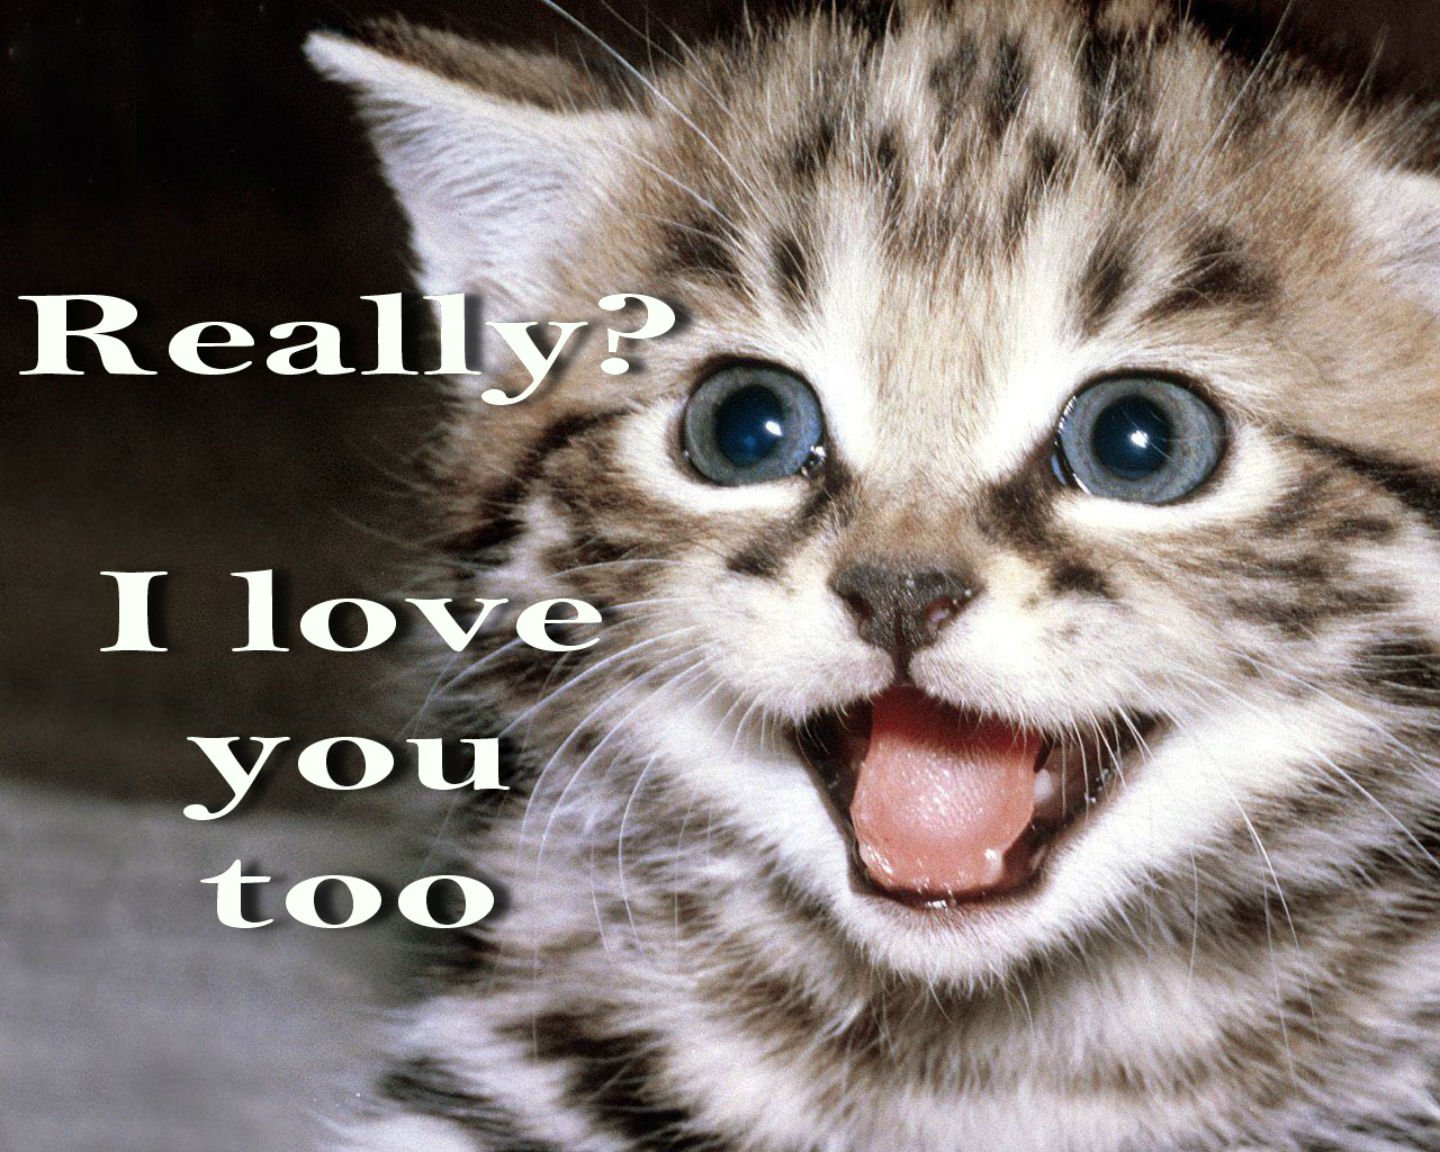 Cat meme quote funny humor grumpy kitten mood love wallpaper ...